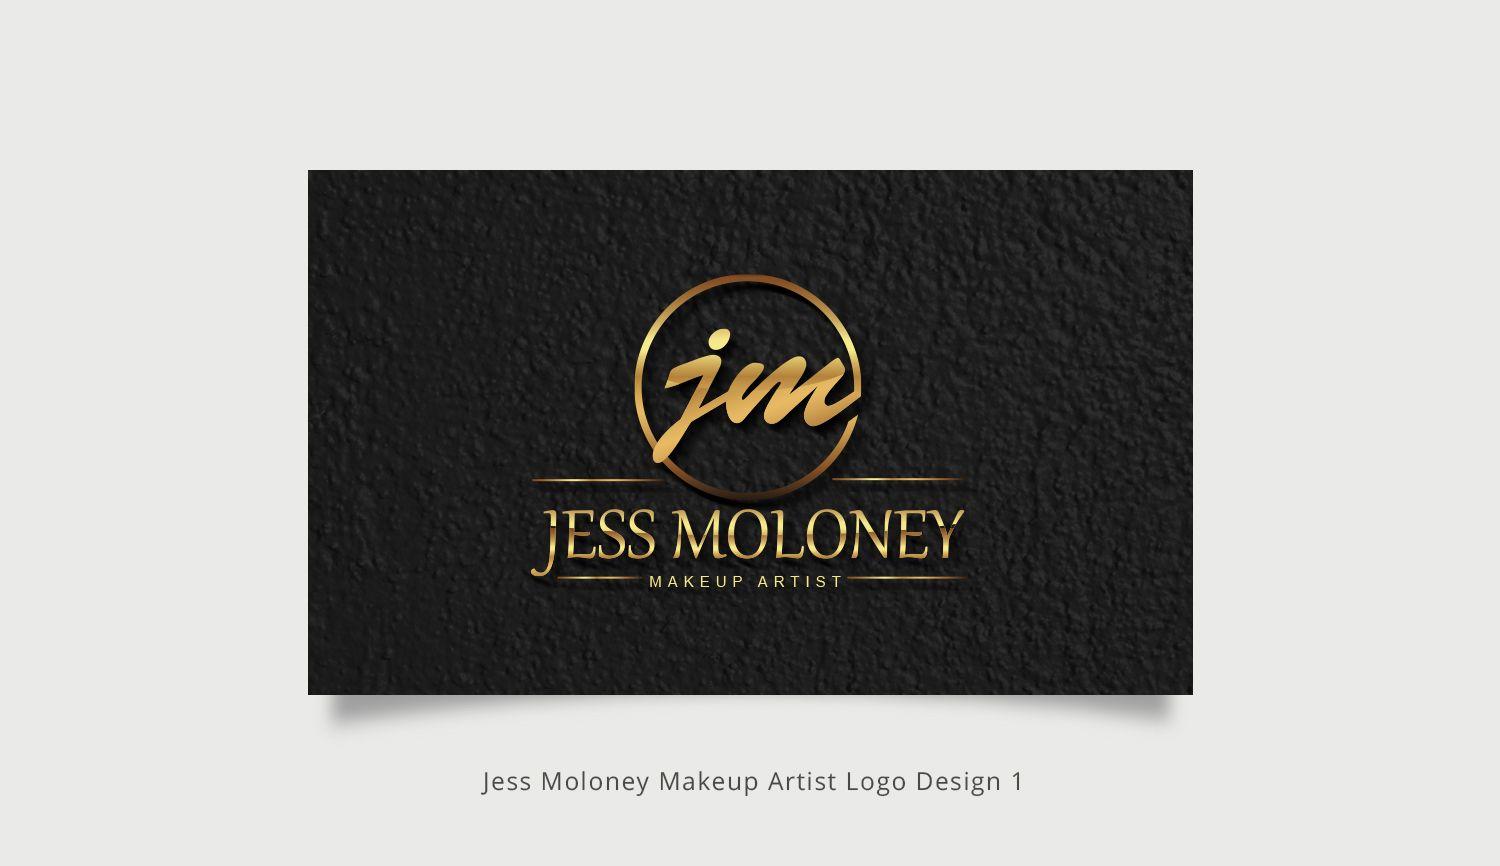 Makeup Artist Company Logo - Modern, Serious, Makeup Logo Design for Jess Moloney Makeup Artist